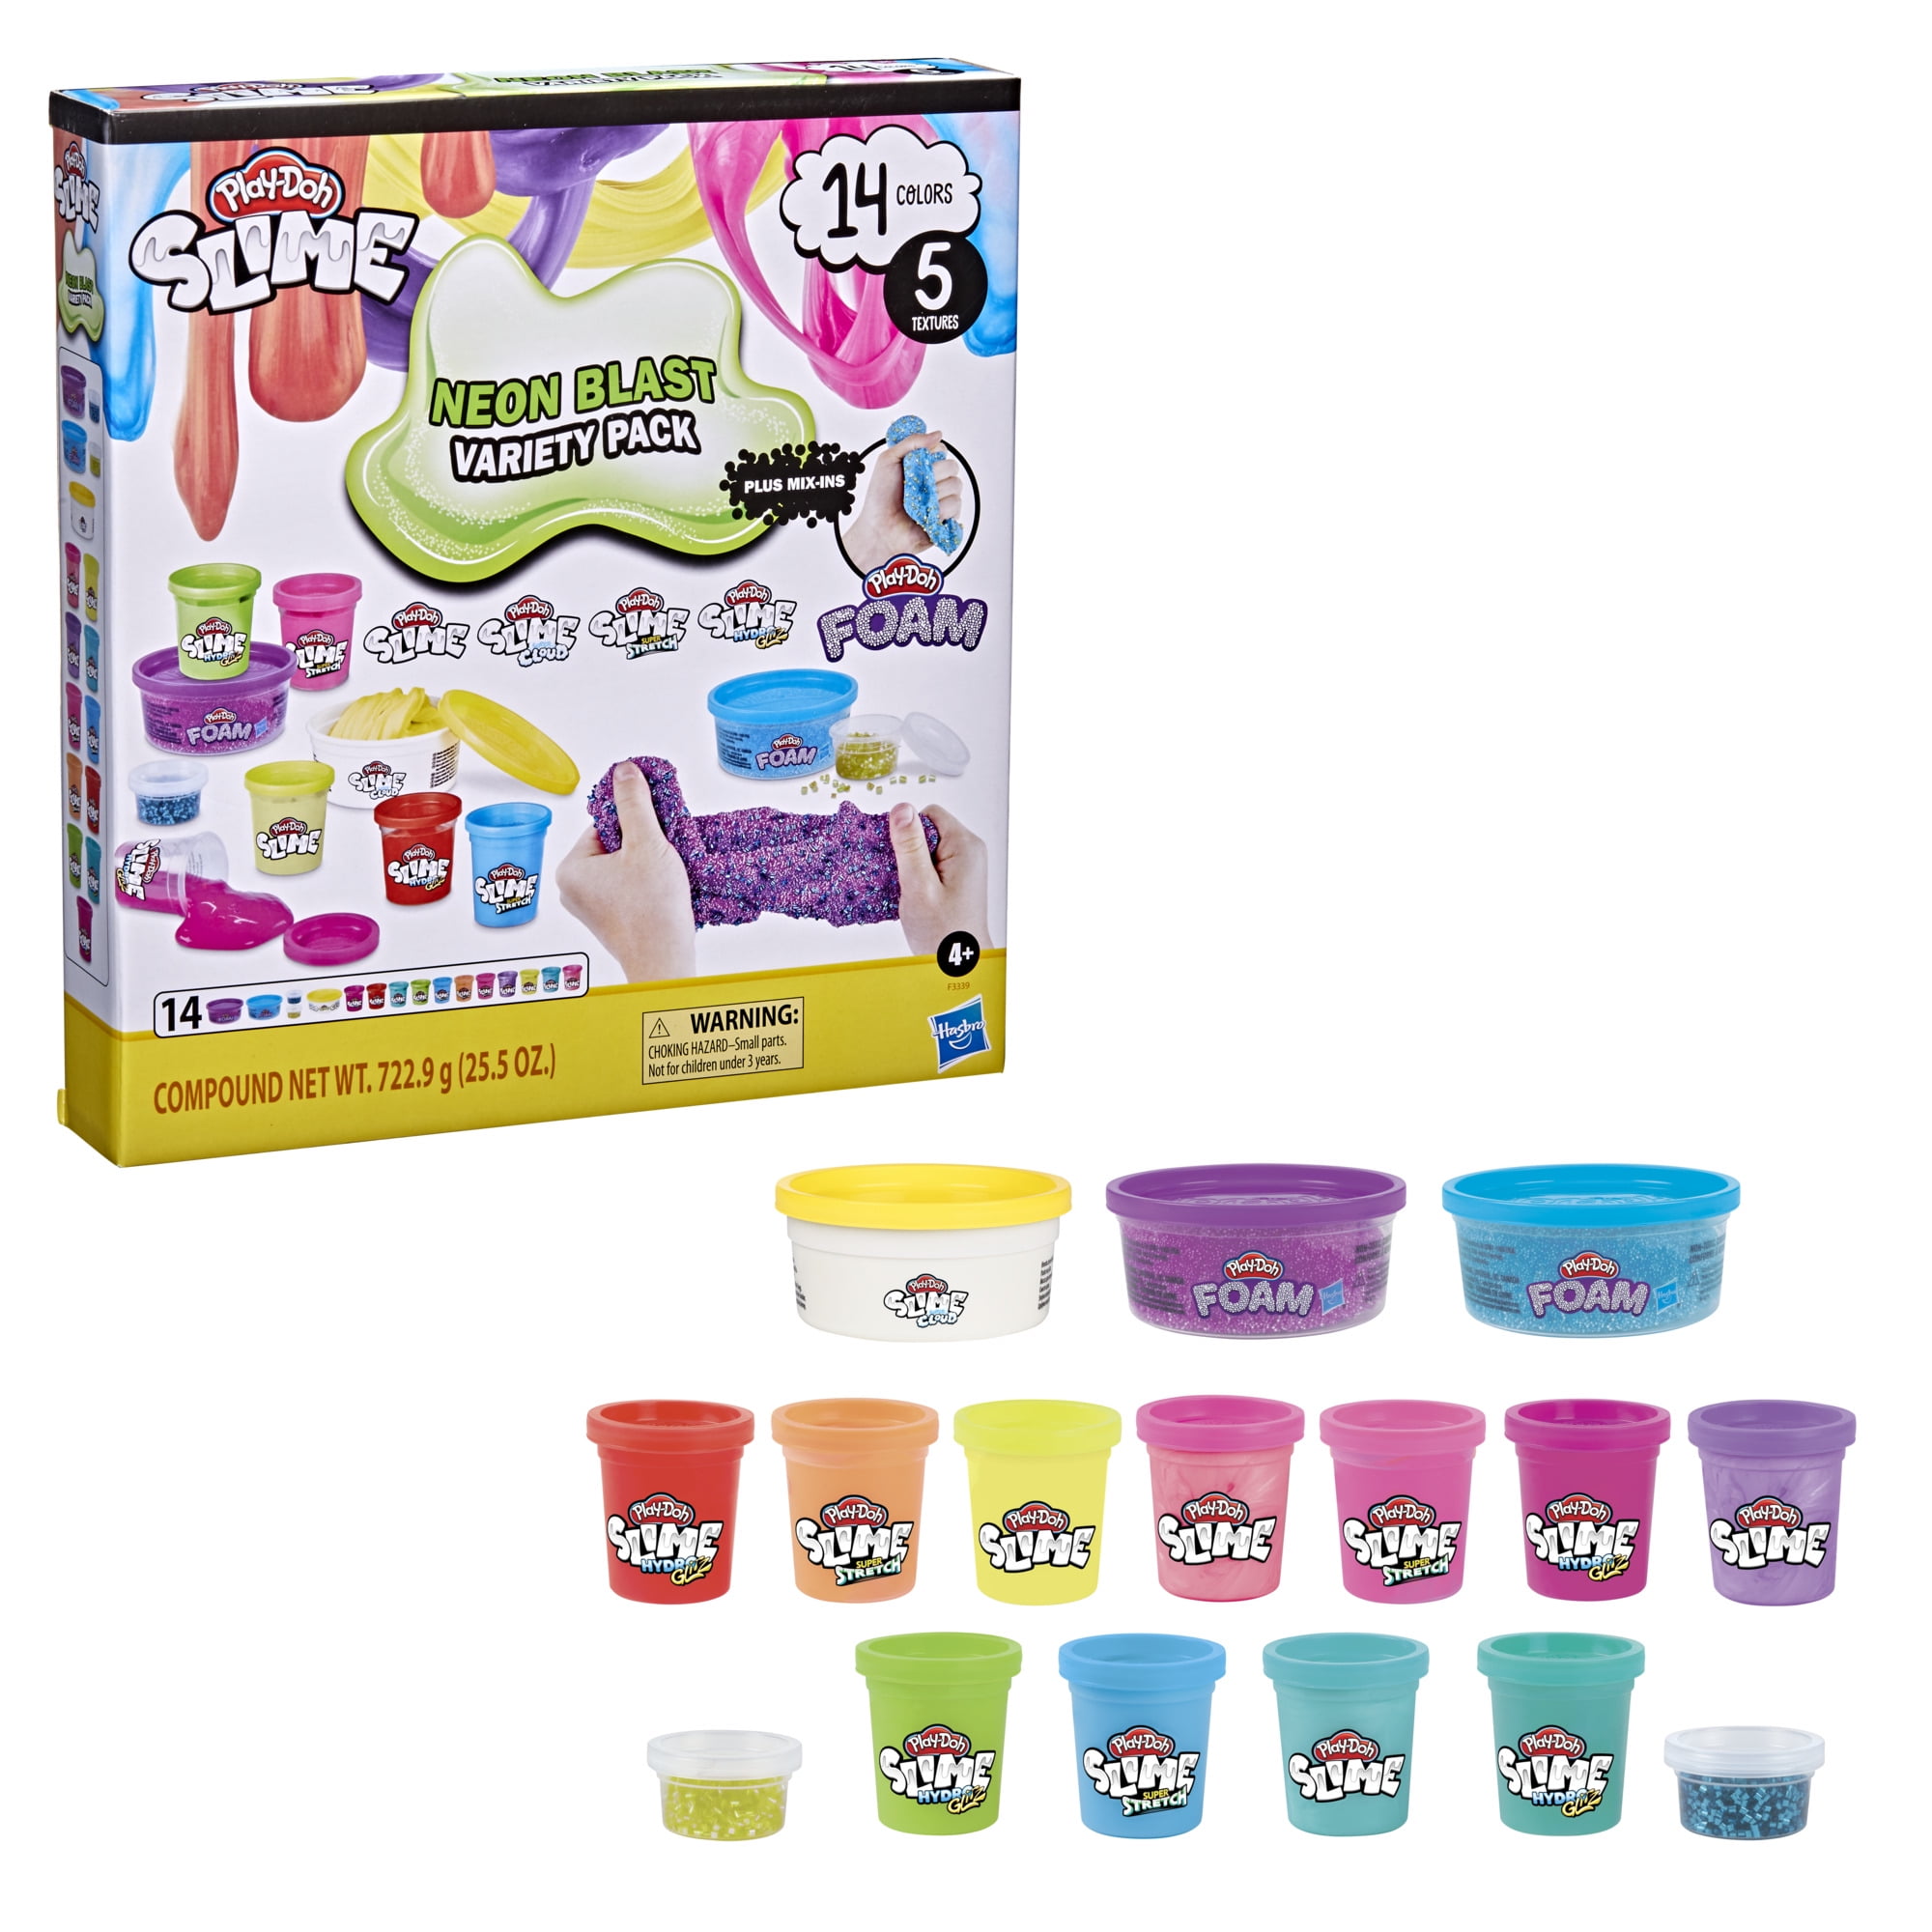 Ucradle Dough Tools Kit, 28 Pcs Playdough Sets for Kids, Play